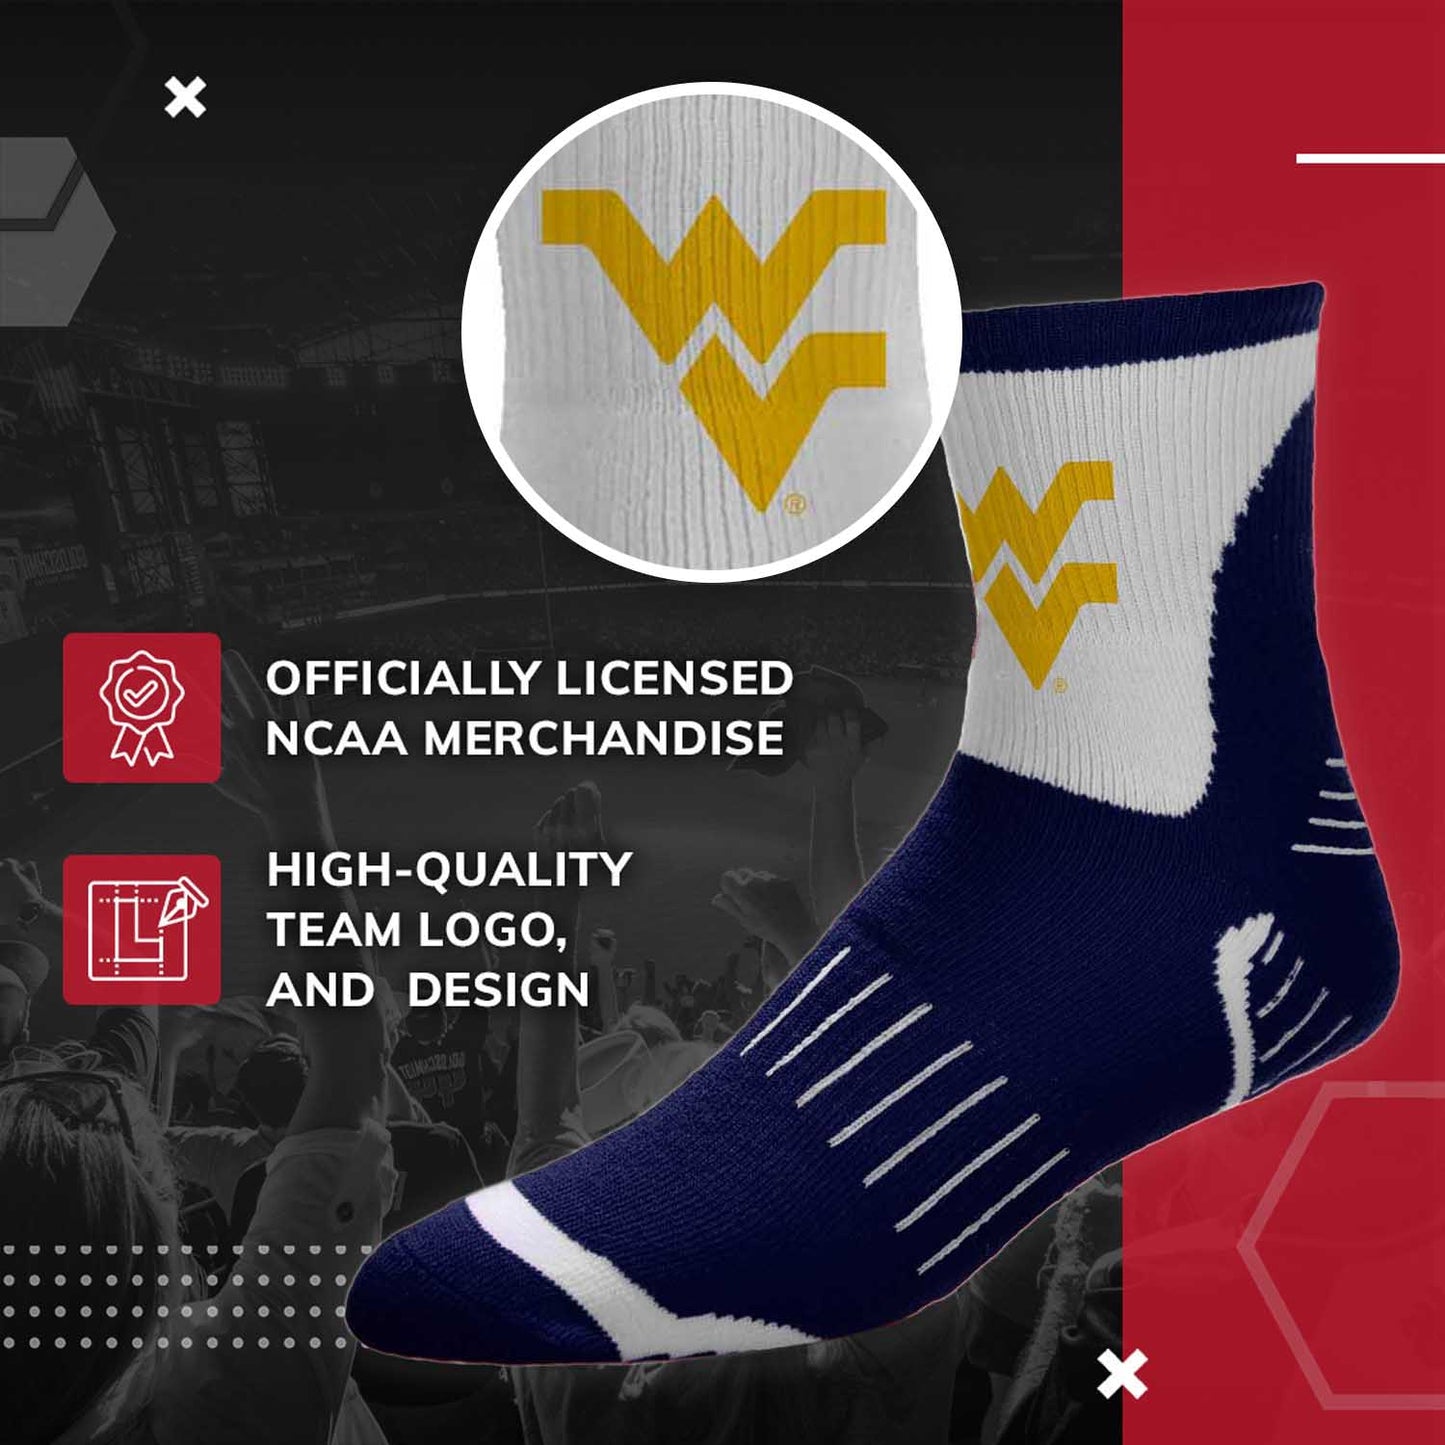 West Virginia Mountaineers NCAA Youth Surge Team Mascot Quarter Socks - Navy